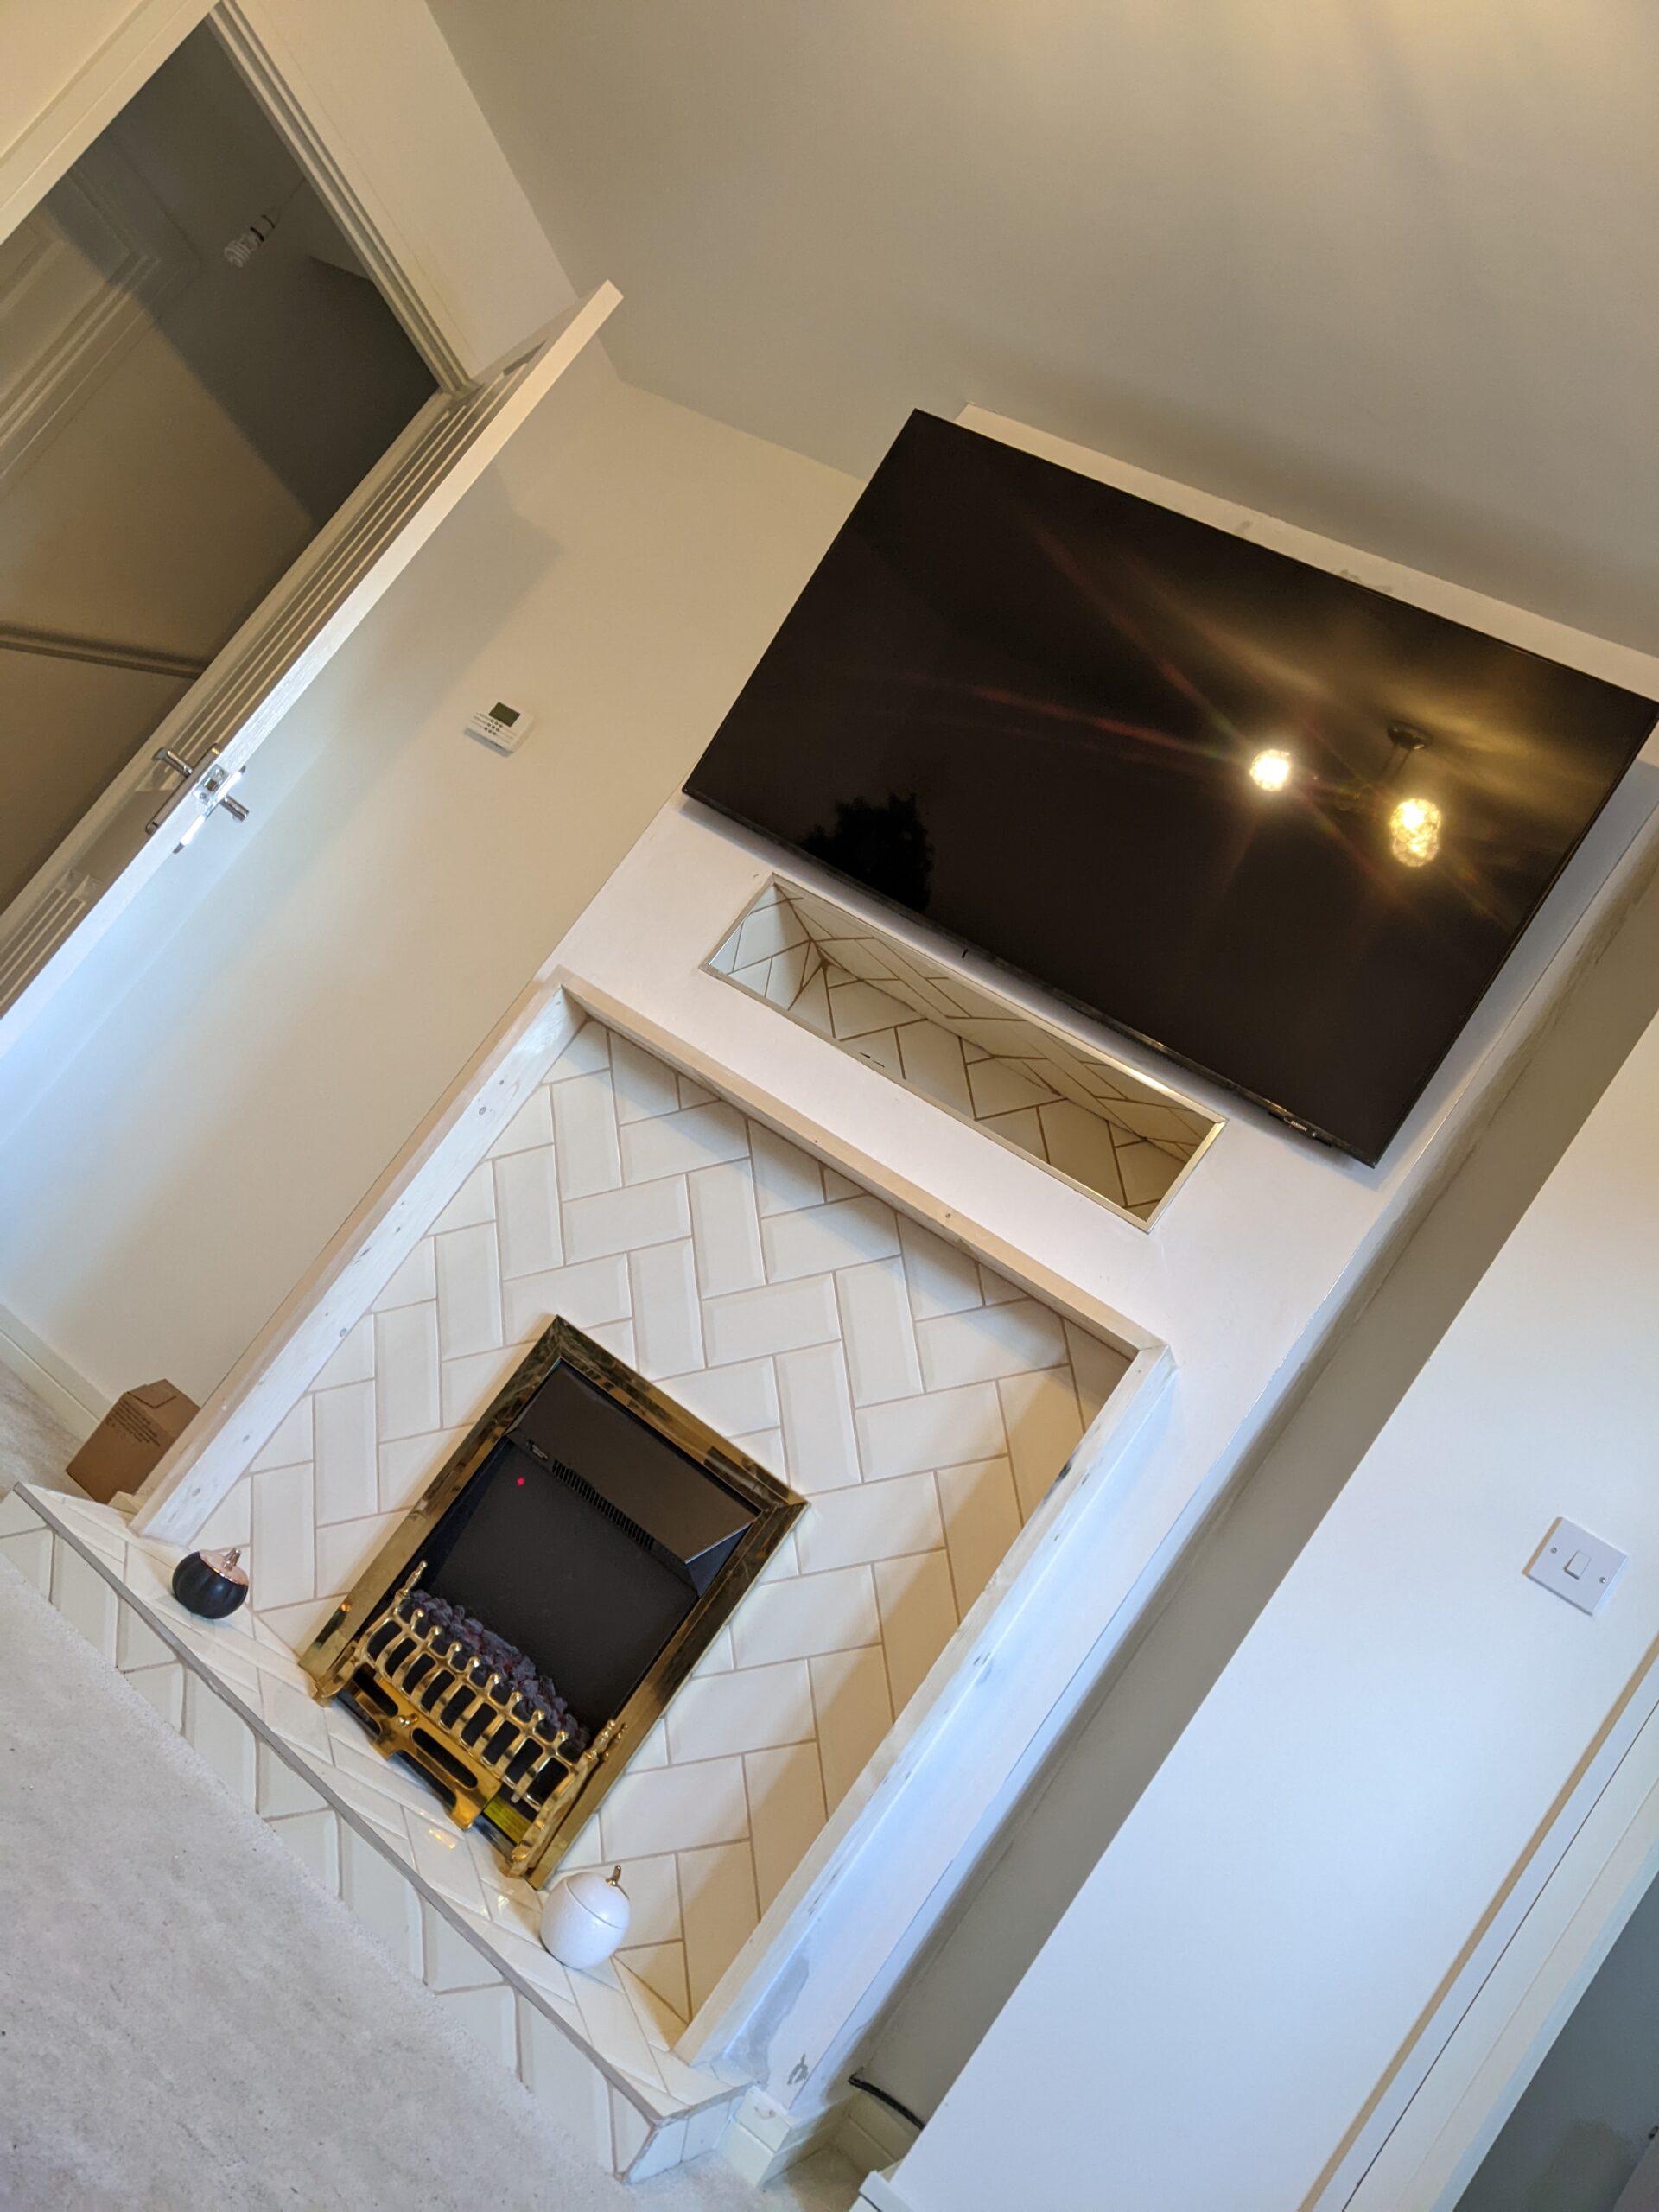 Install fireplace / TV wall